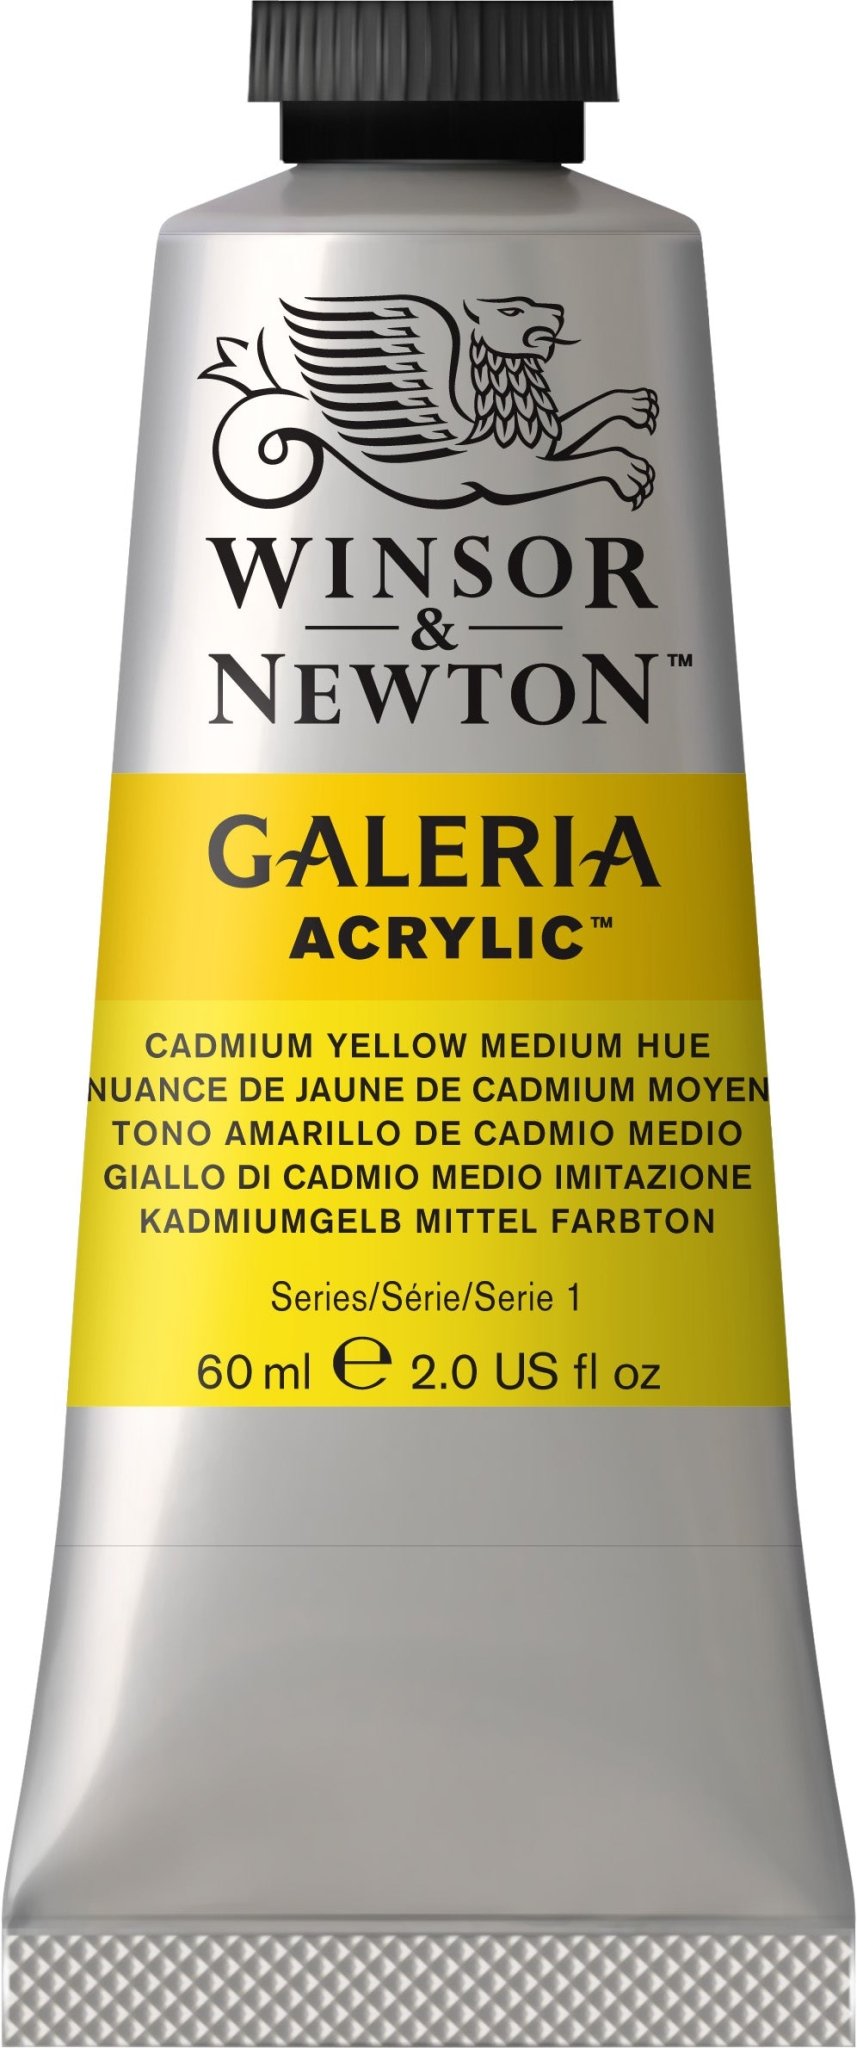 W & N Galeria Acrylic 60ml Cadmium Yellow Medium Hue - theartshop.com.au